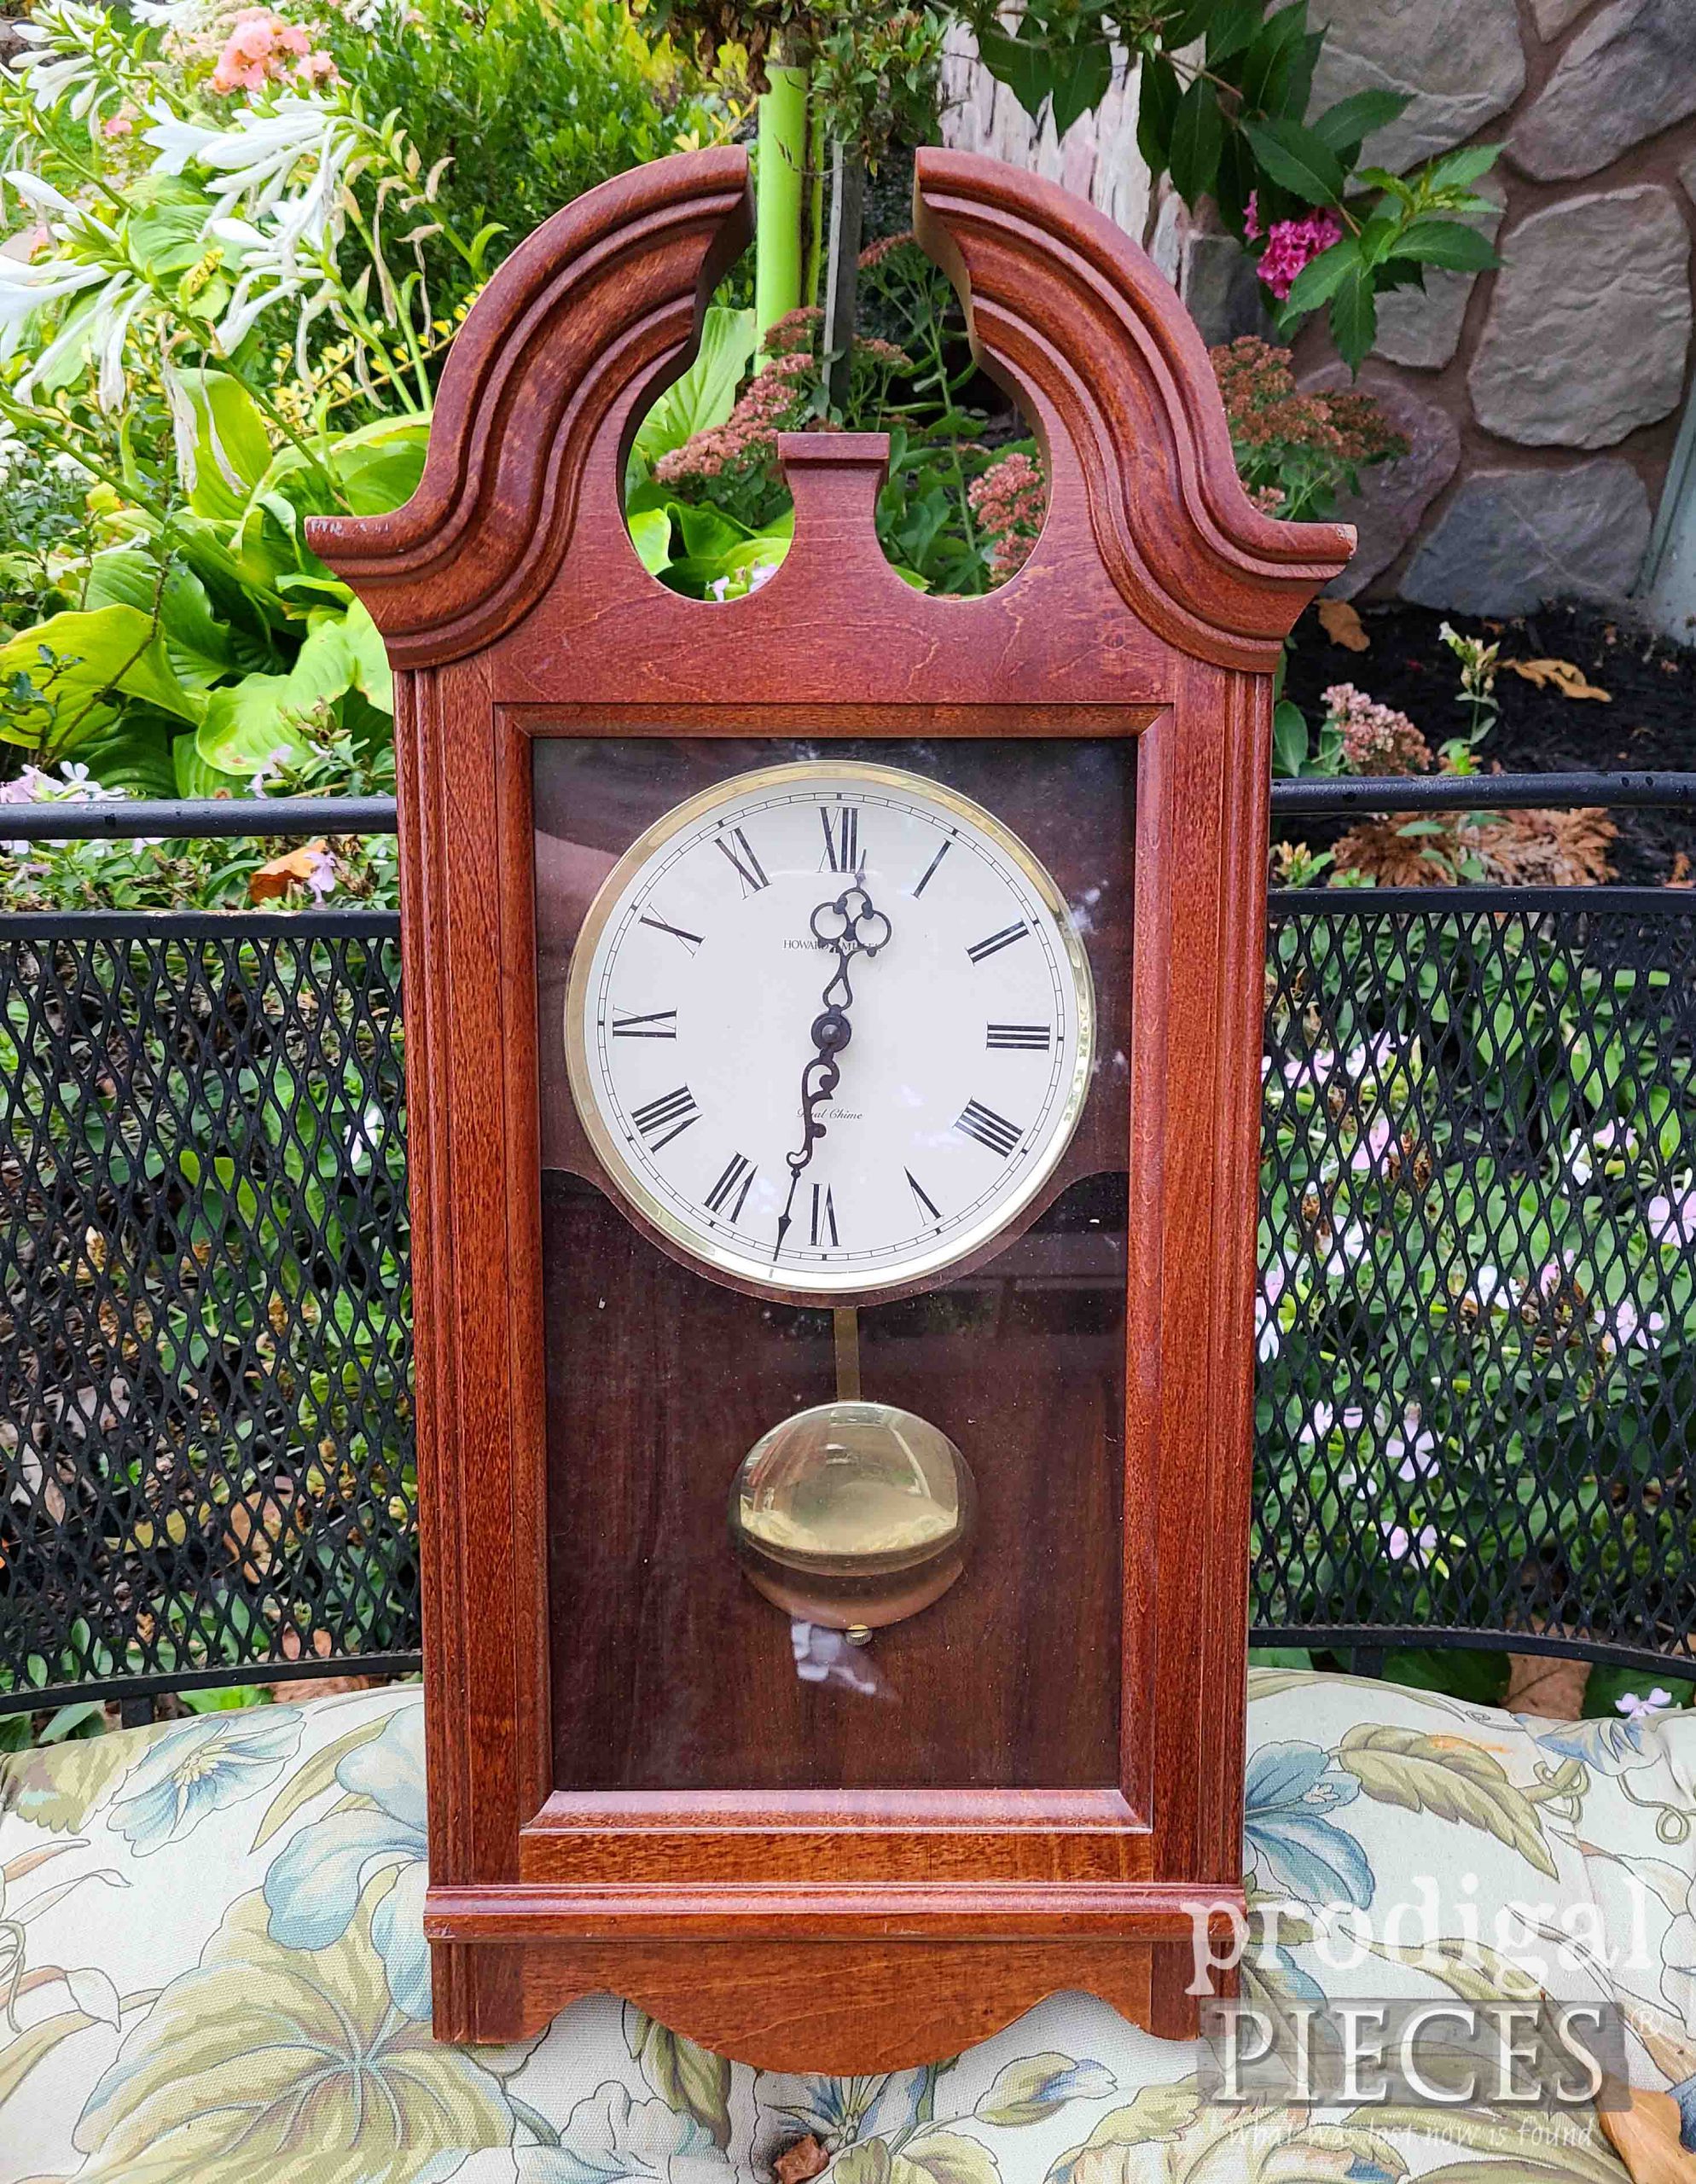 Vintage Wall Clock Before Repurposing by Larissa of Prodigal Pieces | prodigalpieces.com #prodigalpieces